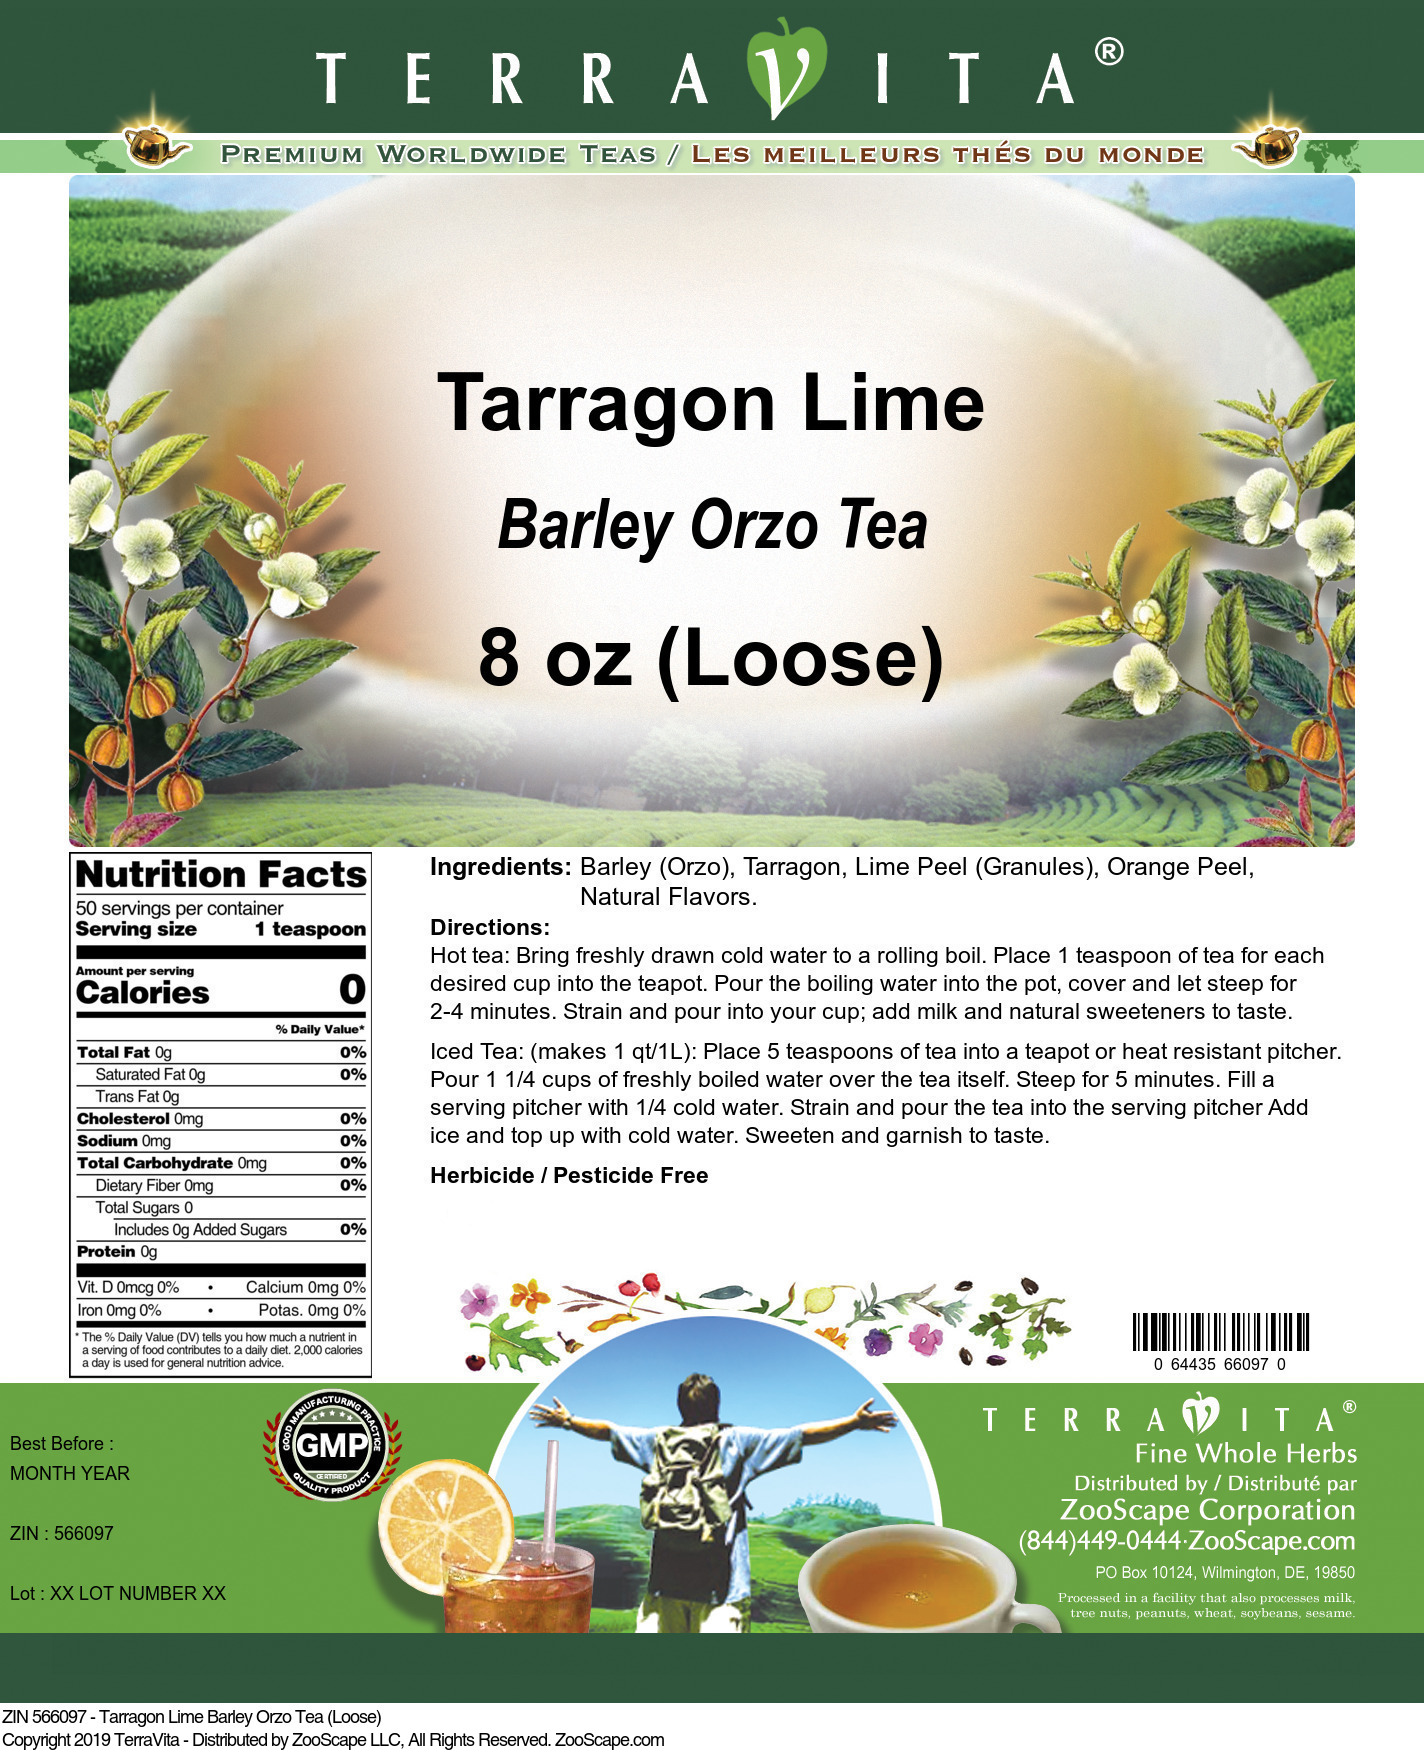 Tarragon Lime Barley Orzo Tea (Loose) - Label